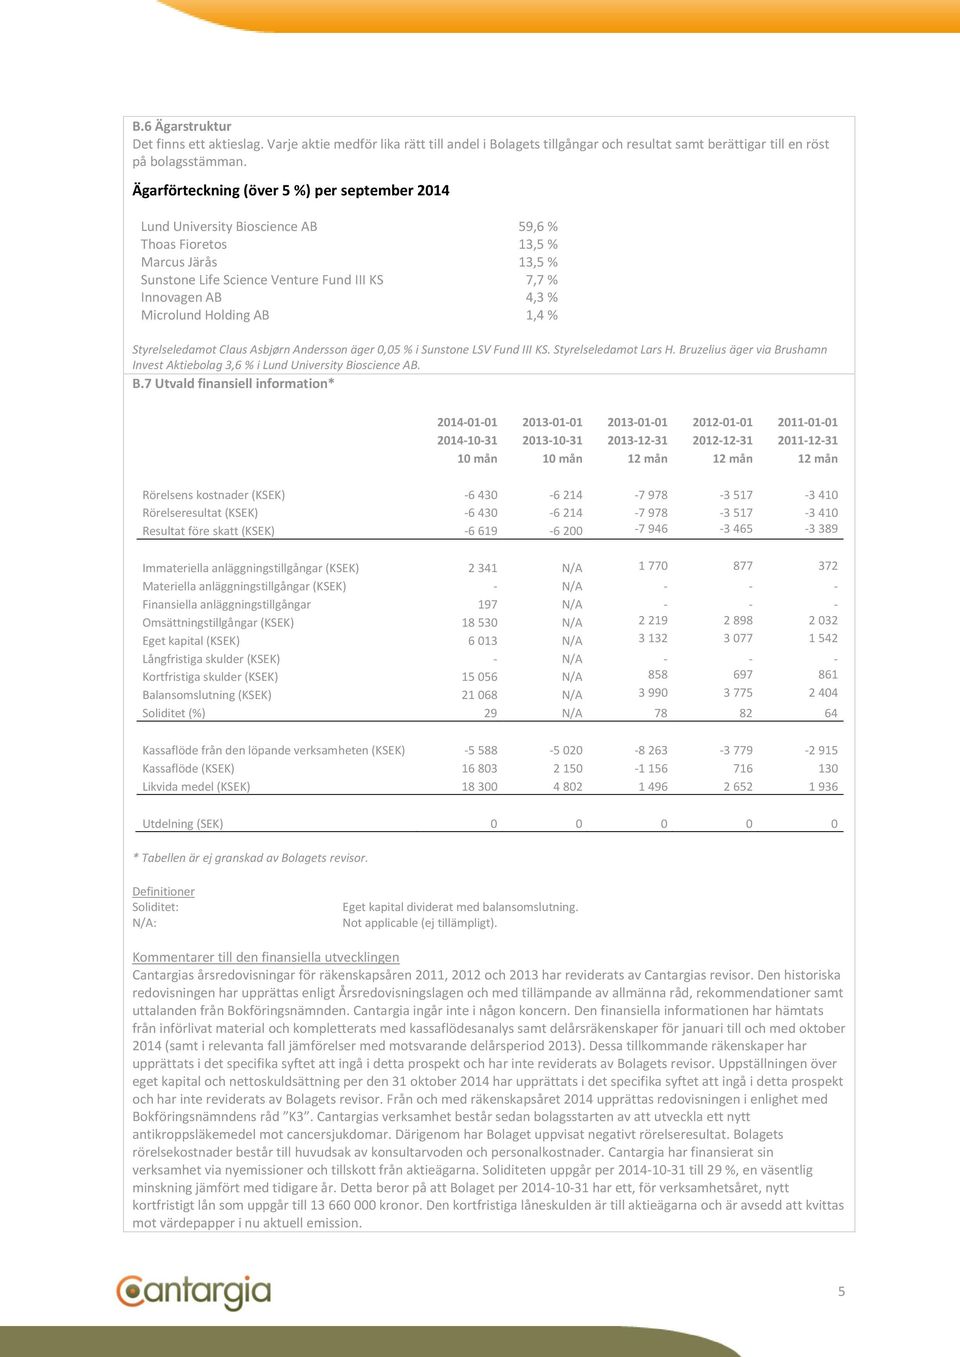 Microlund Holding AB 1,4 % Styrelseledamot Claus Asbjørn Andersson äger 0,05 % i Sunstone LSV Fund III KS. Styrelseledamot Lars H.